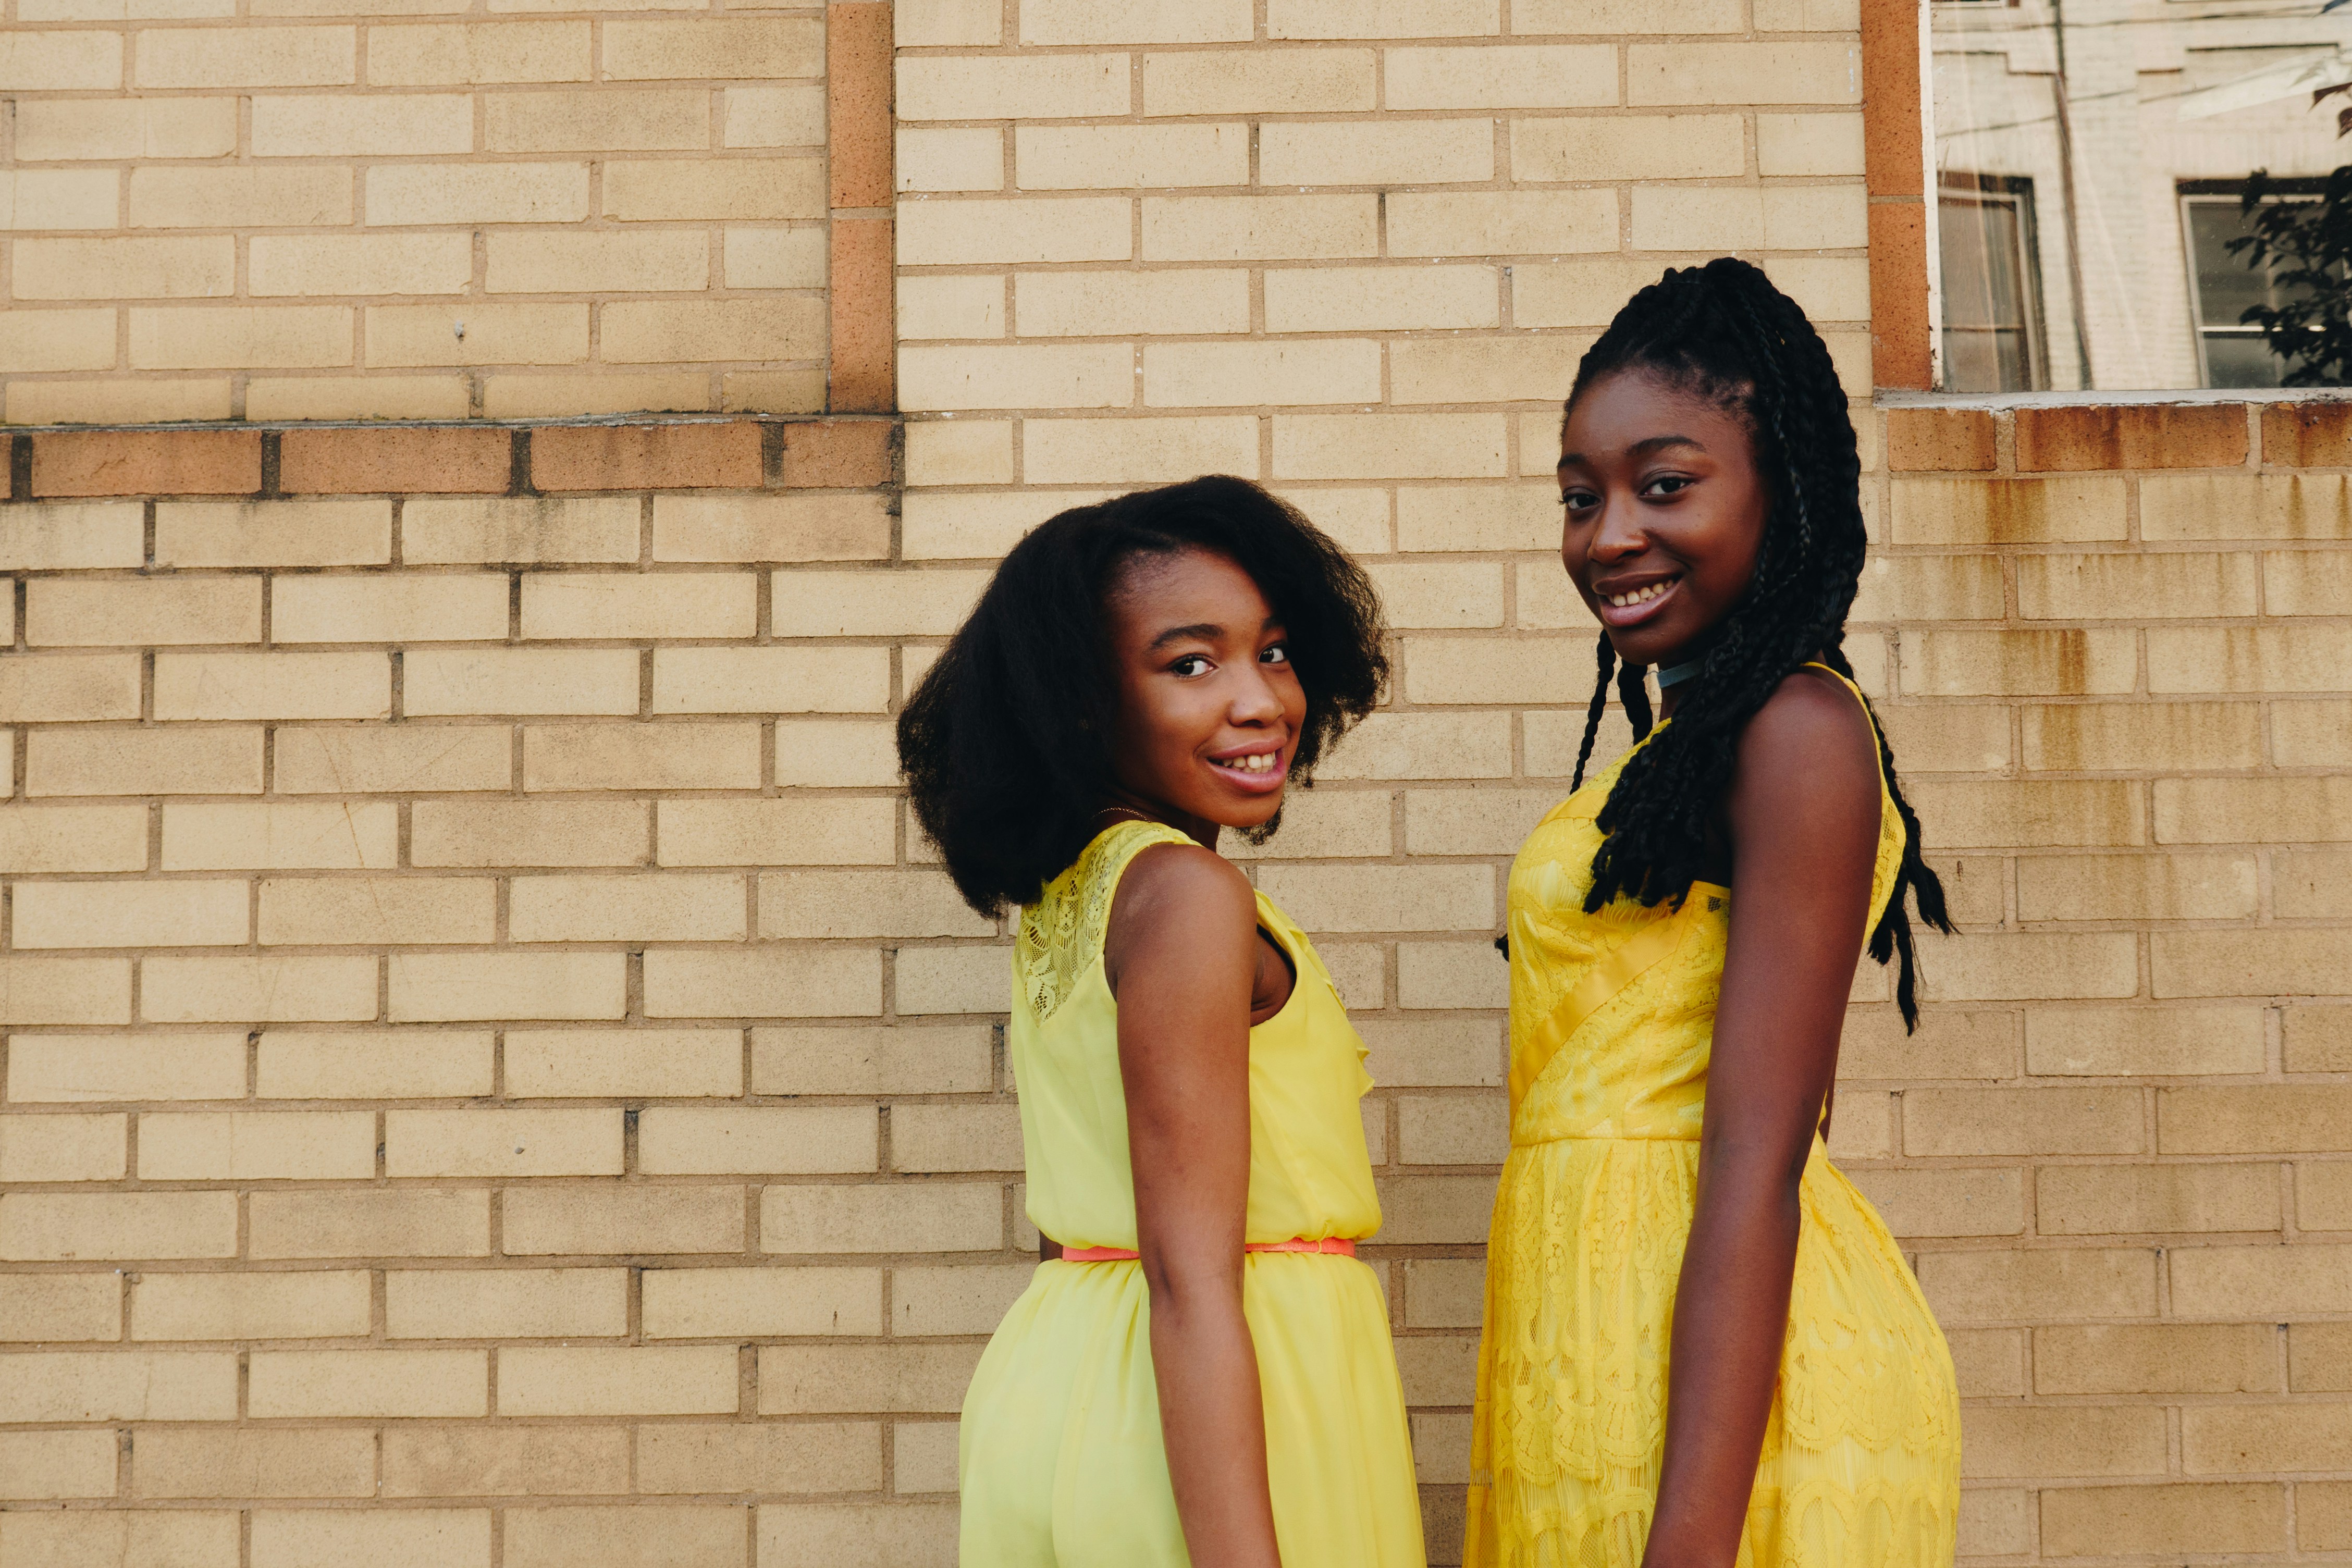 Smiling girls in yellow